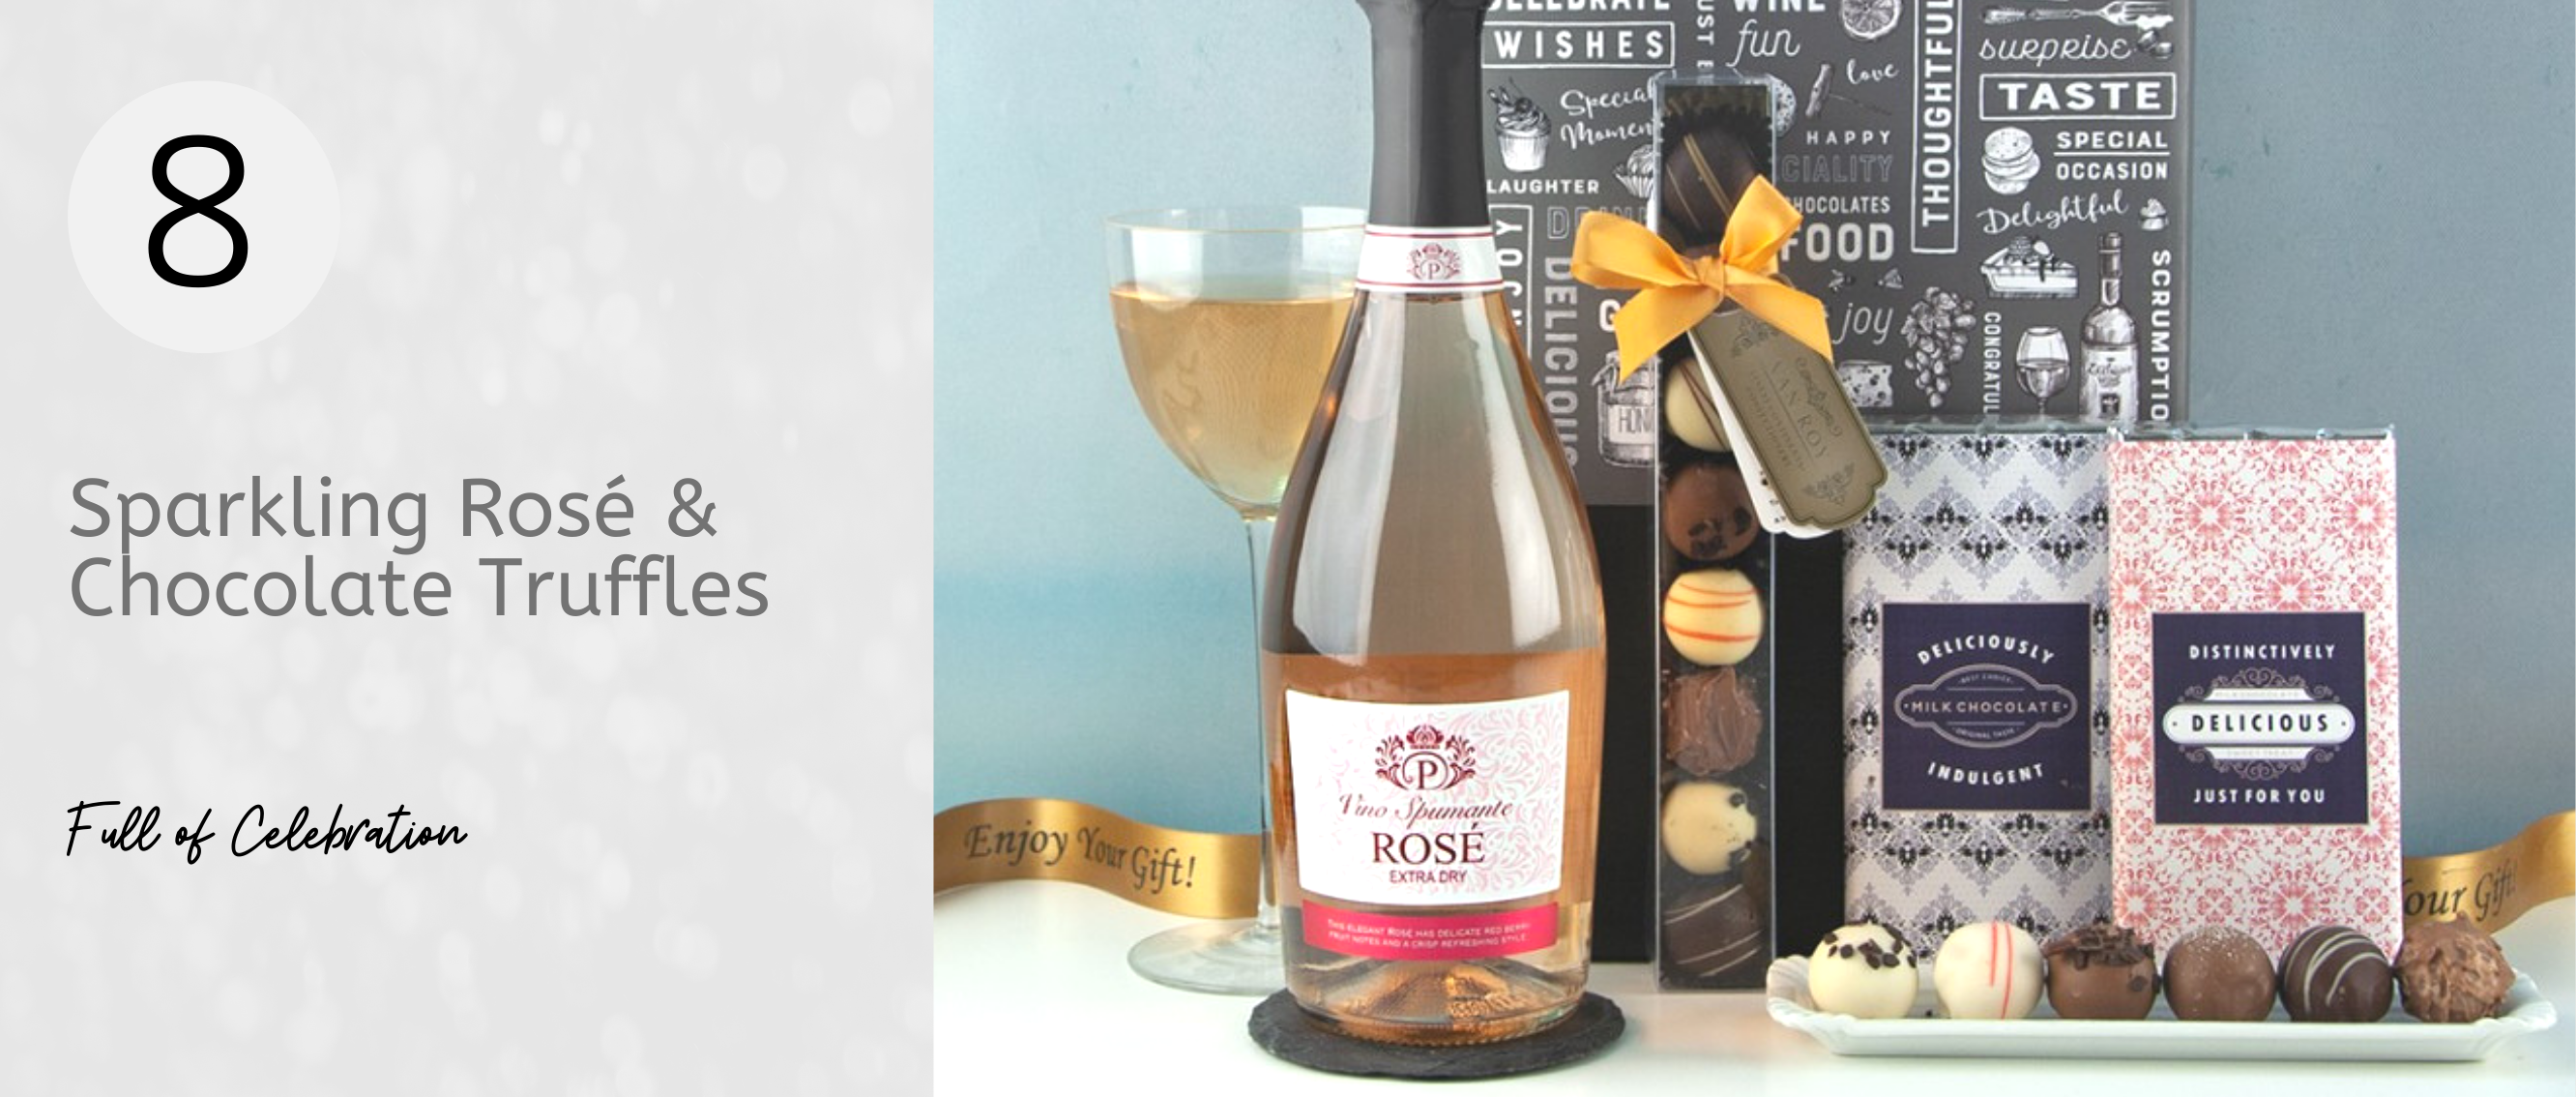 Romantic gift of rose wine and chocolate truffles...